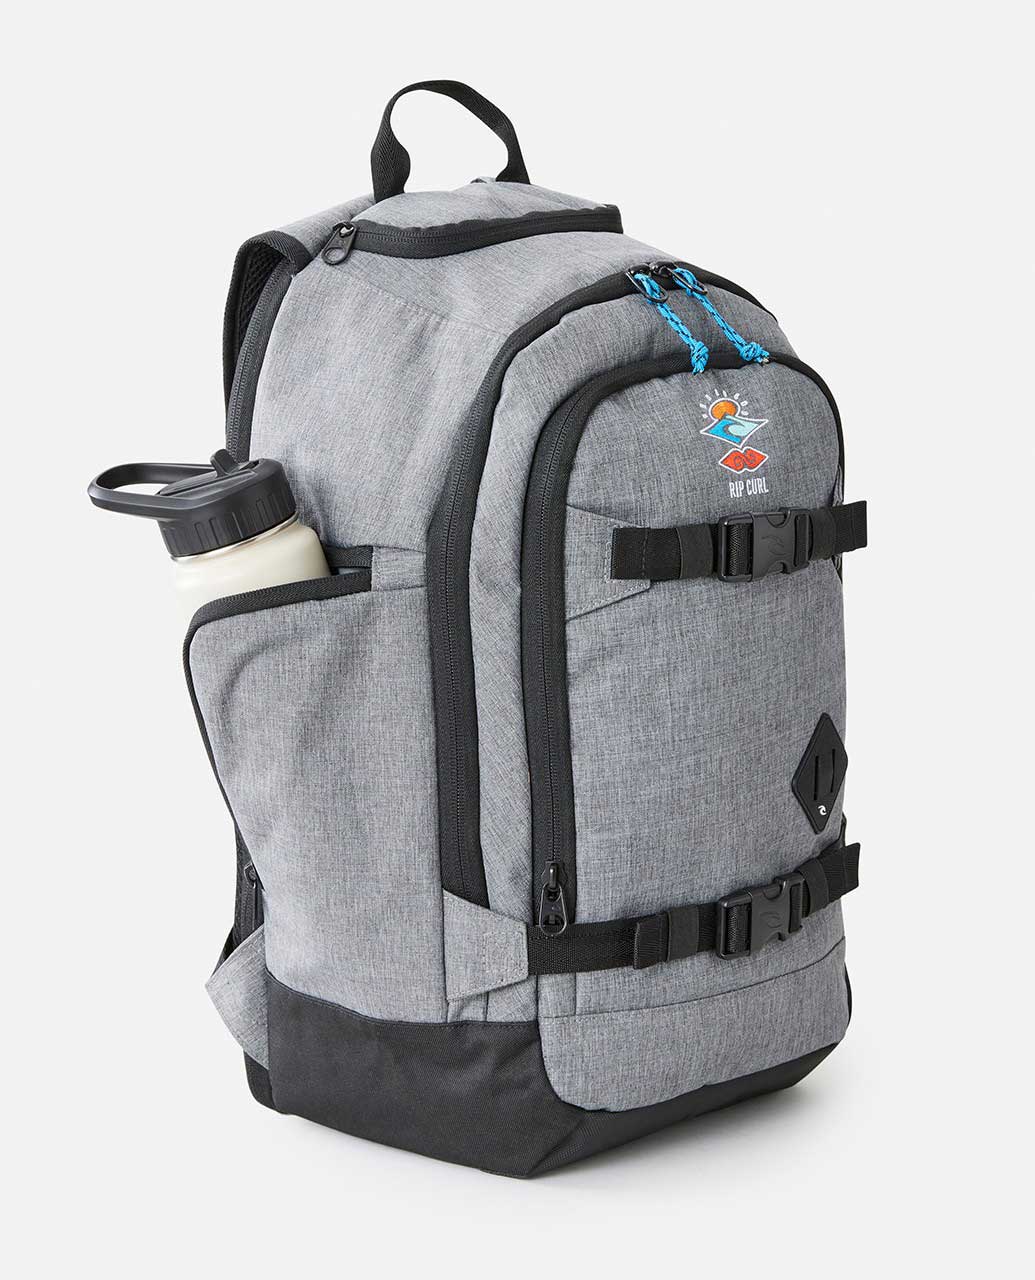 Ripcurl Posse 33L Backpack